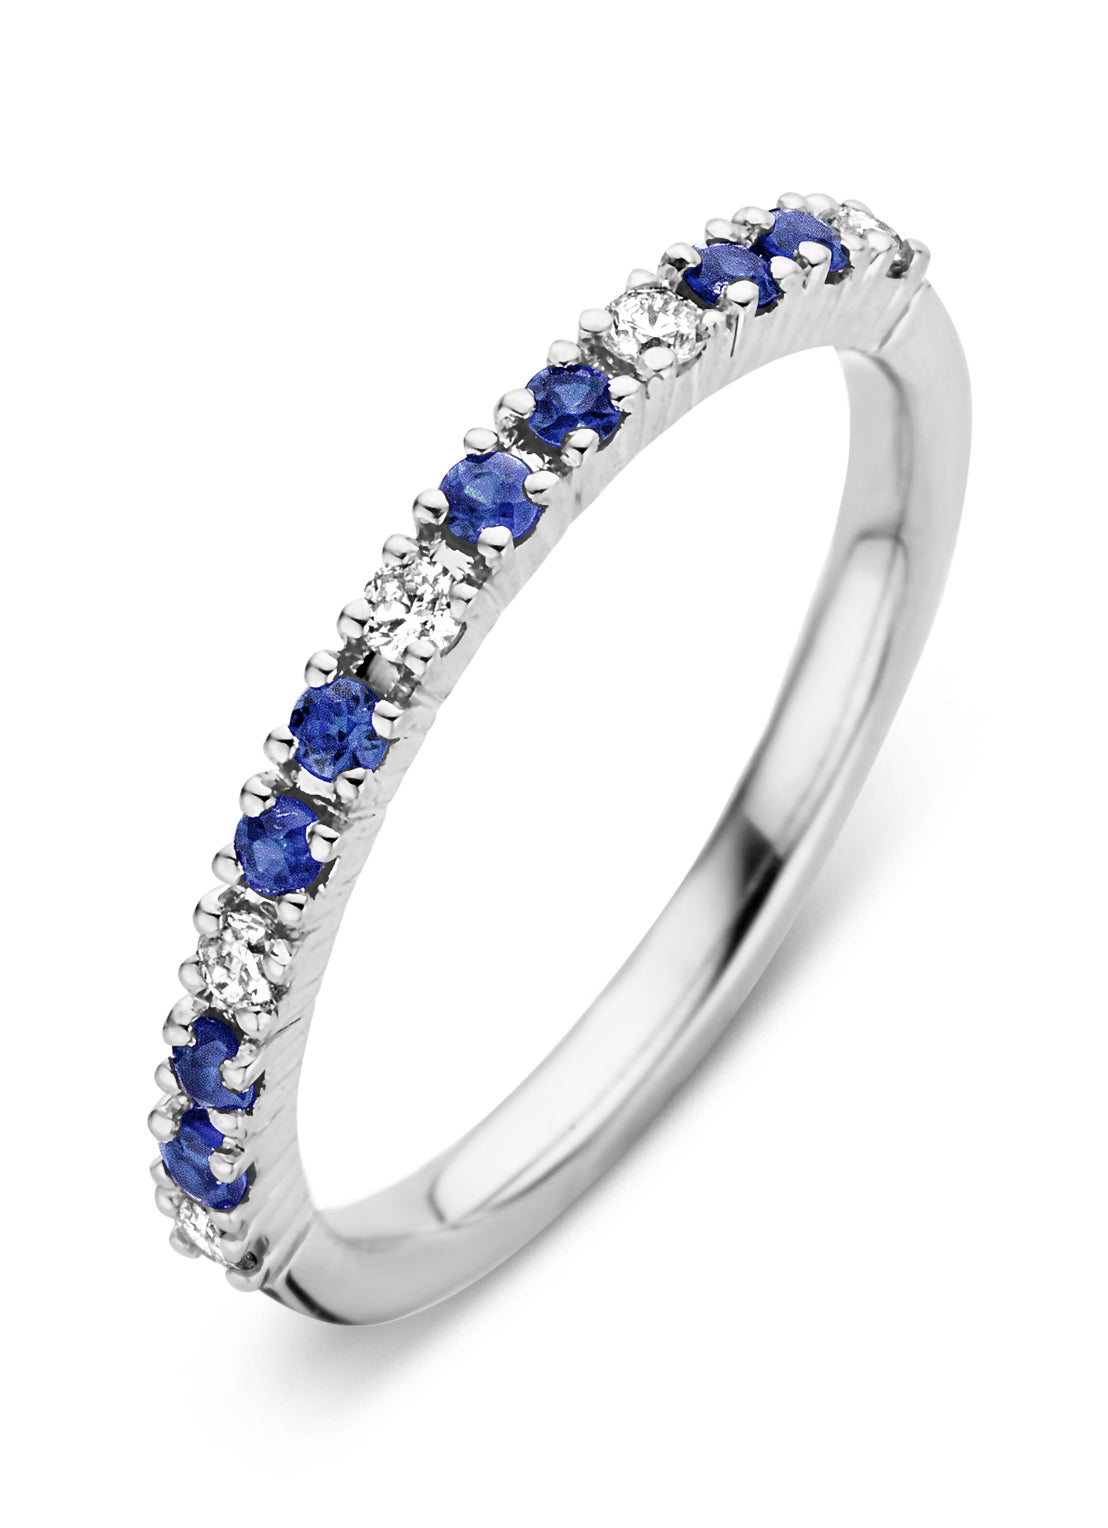 White gold ring, 0.22 ct blue sapphire, ensemble